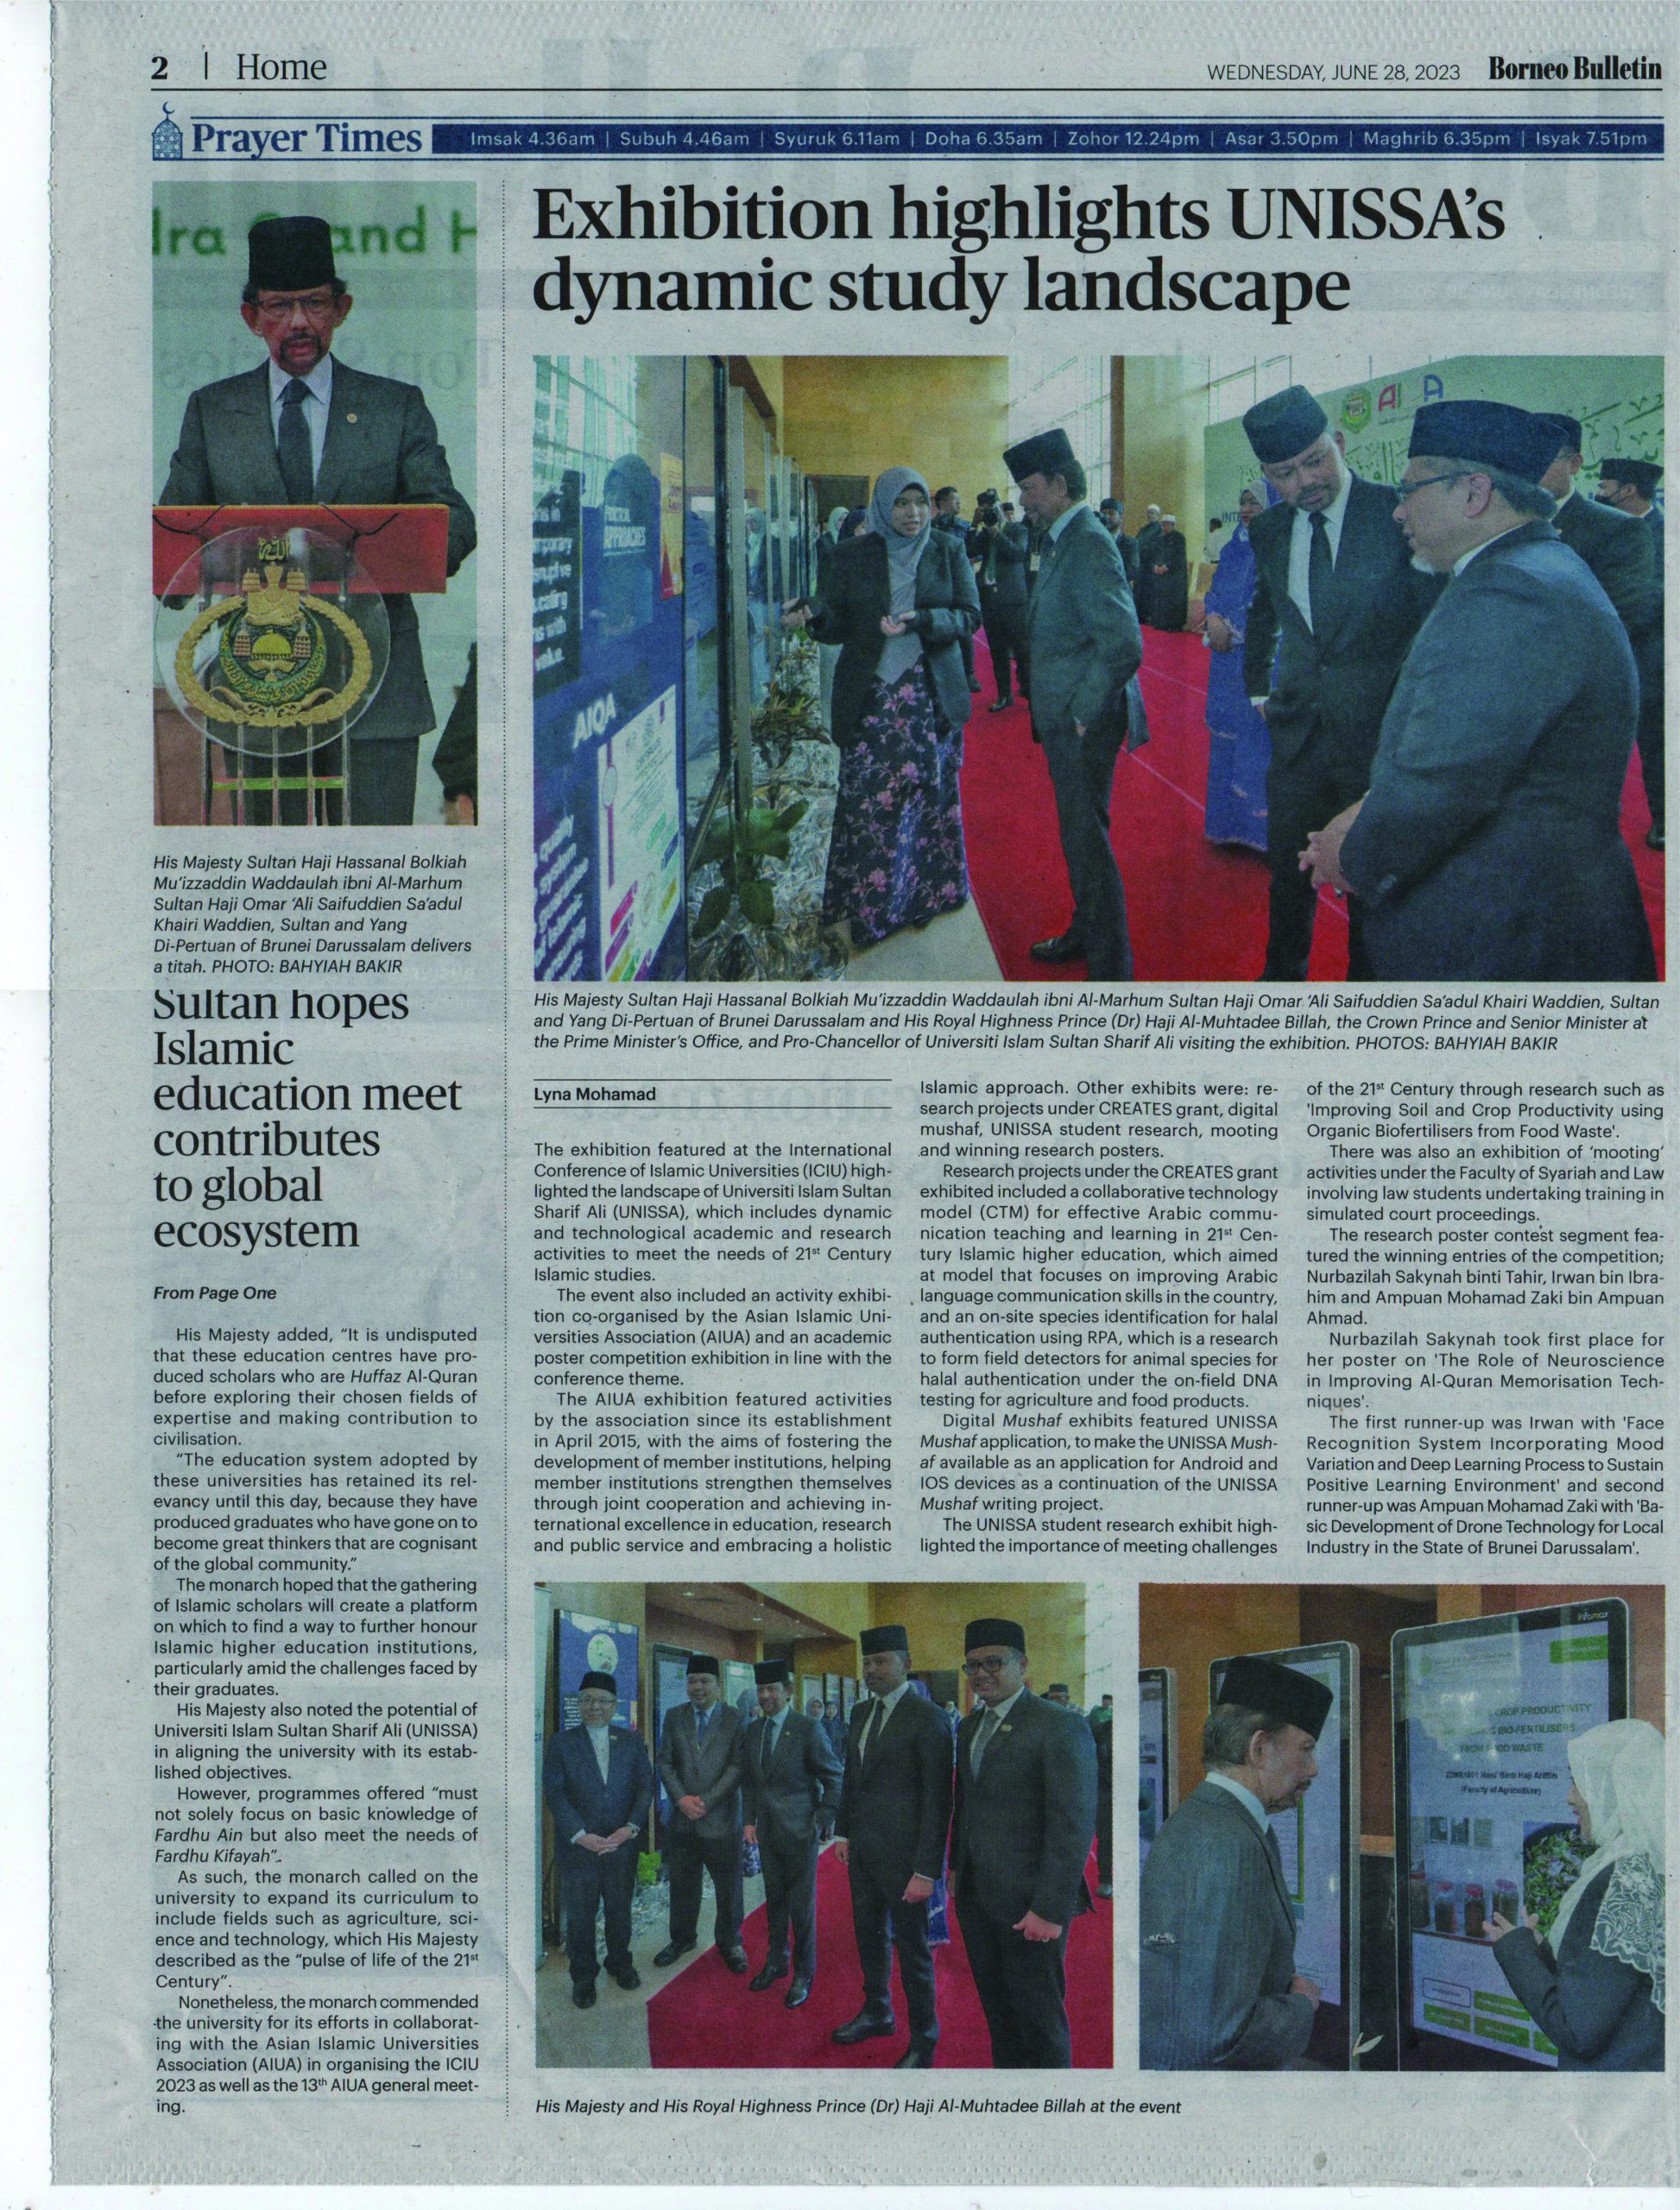 Halaman kedua Borneo Bulletin edisi 28 Juni 2023